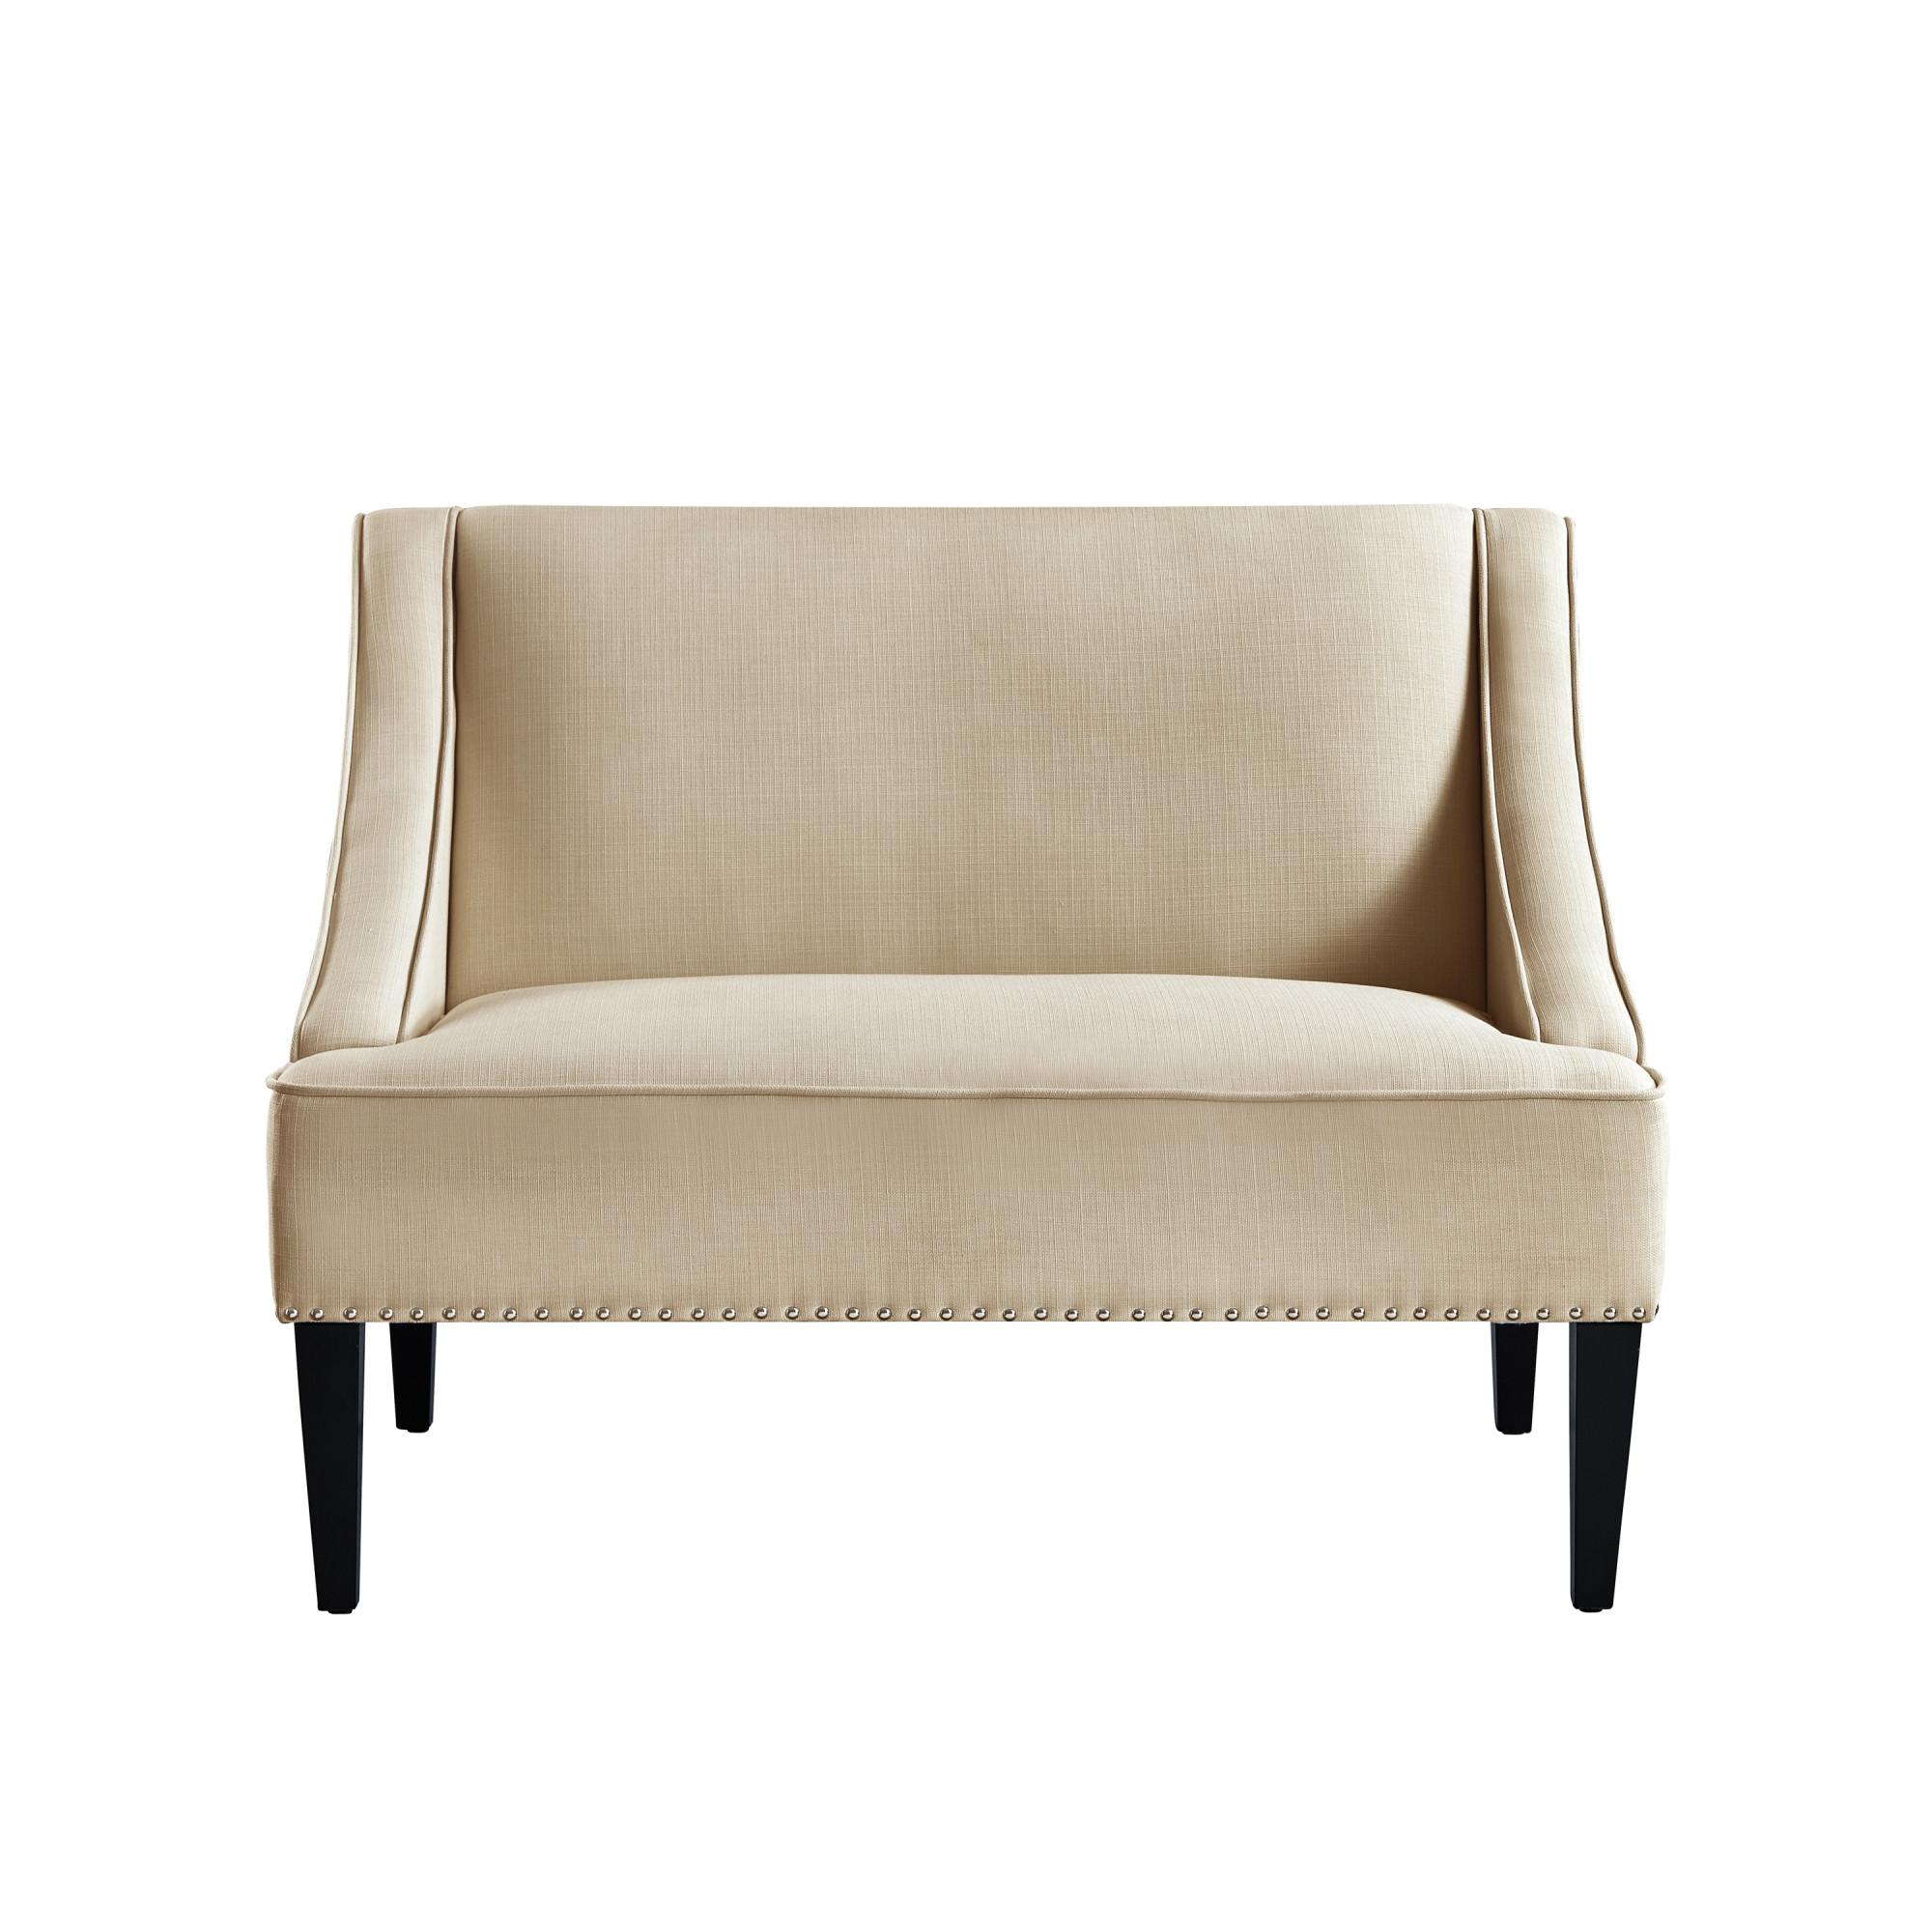 45" Beige And Black Upholstered Linen Bench-490922-1